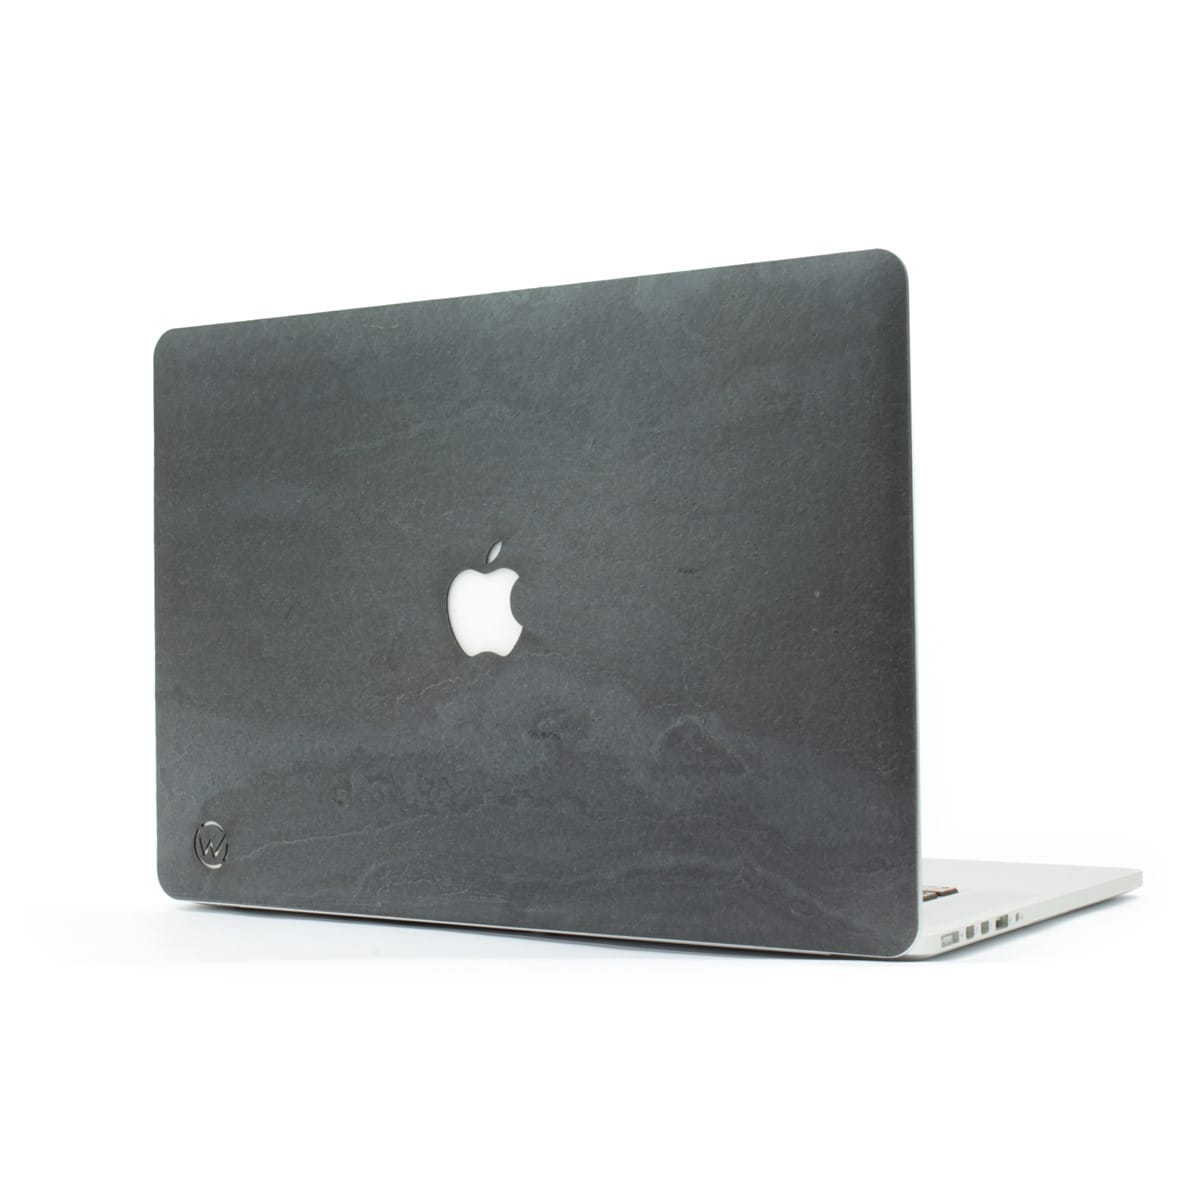 Woodstache  Cover en bois MacBook Made in France